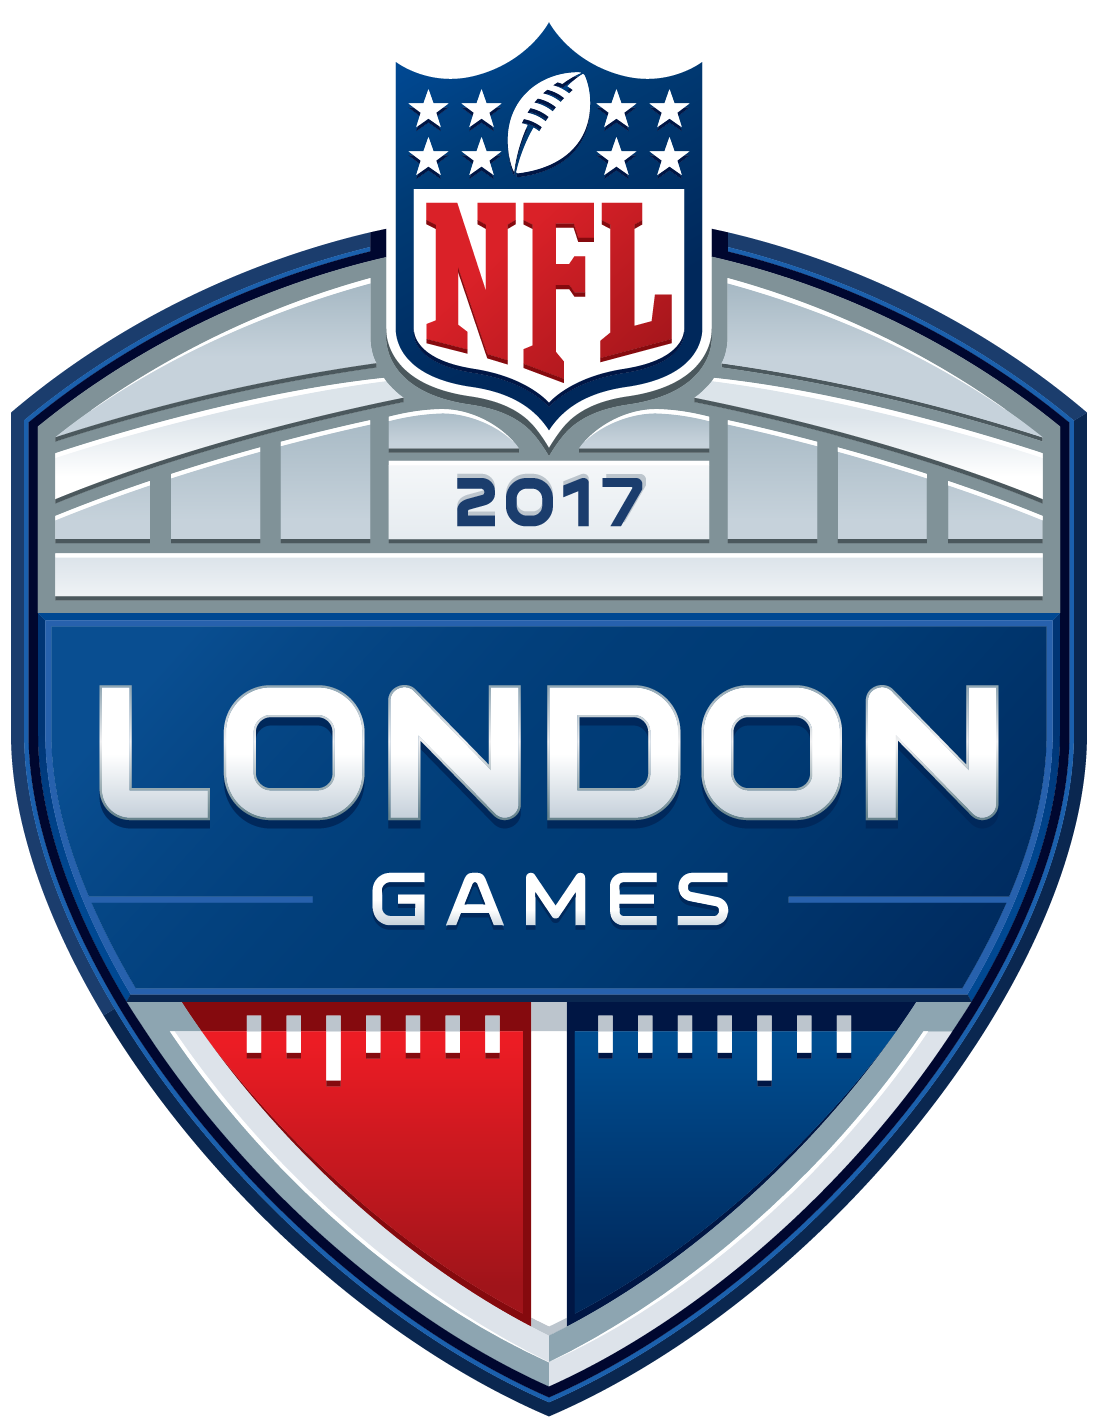 London Games - Nfl, Transparent background PNG HD thumbnail